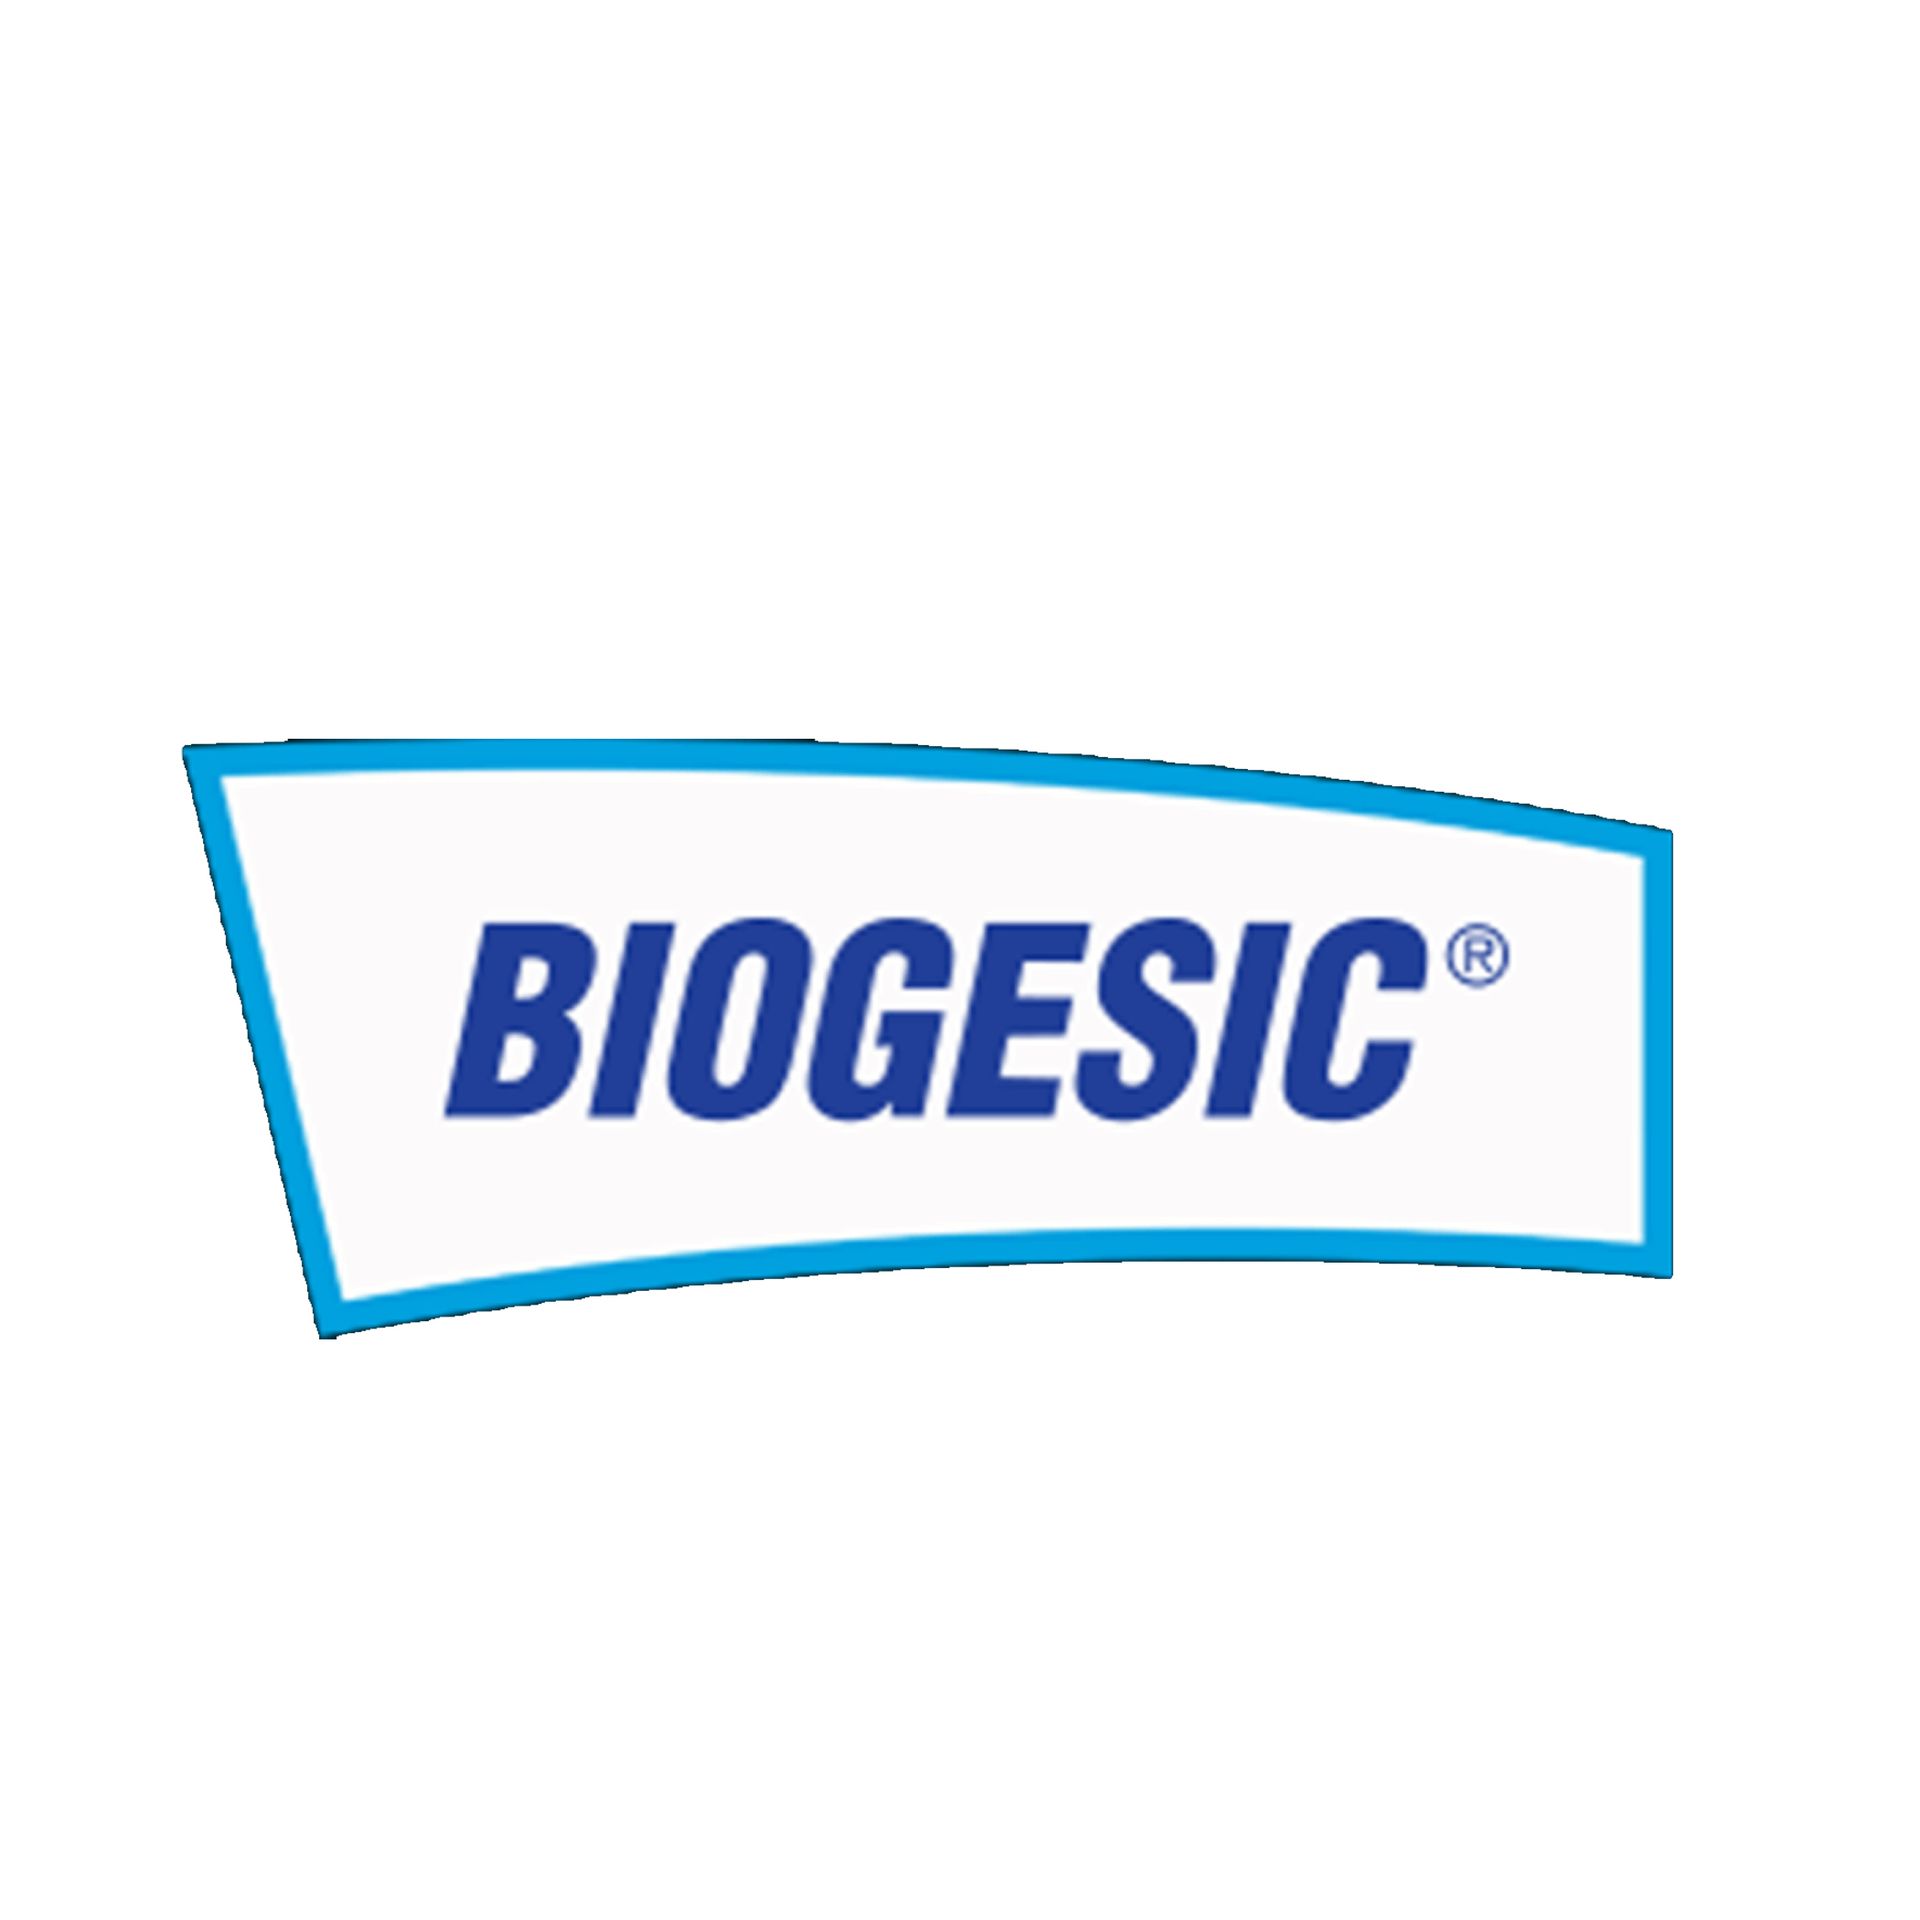 Product Brand: Bio-gesic